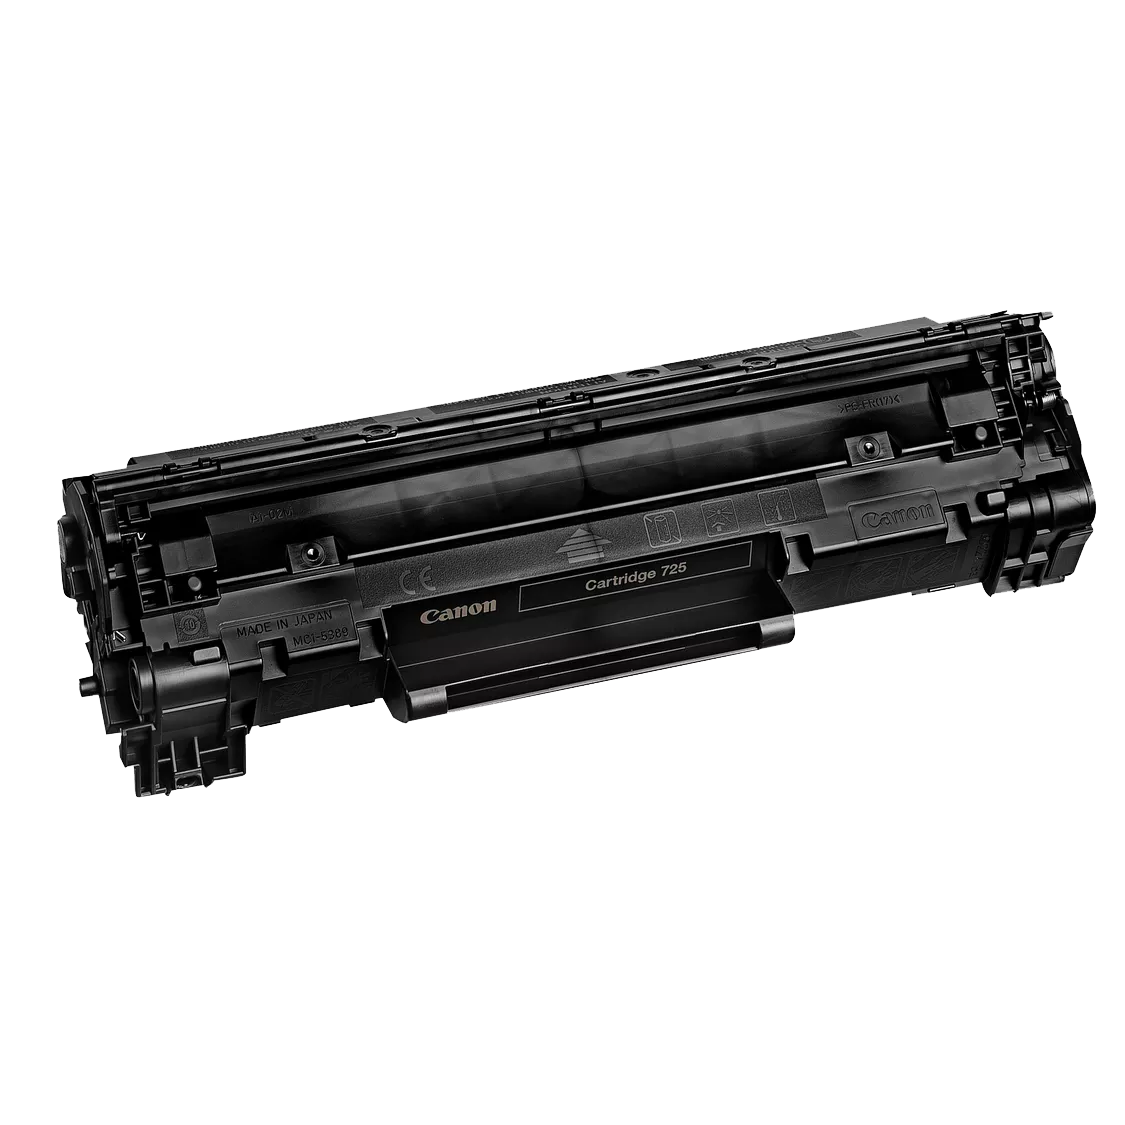 Canon 725 Black Toner Cartridge